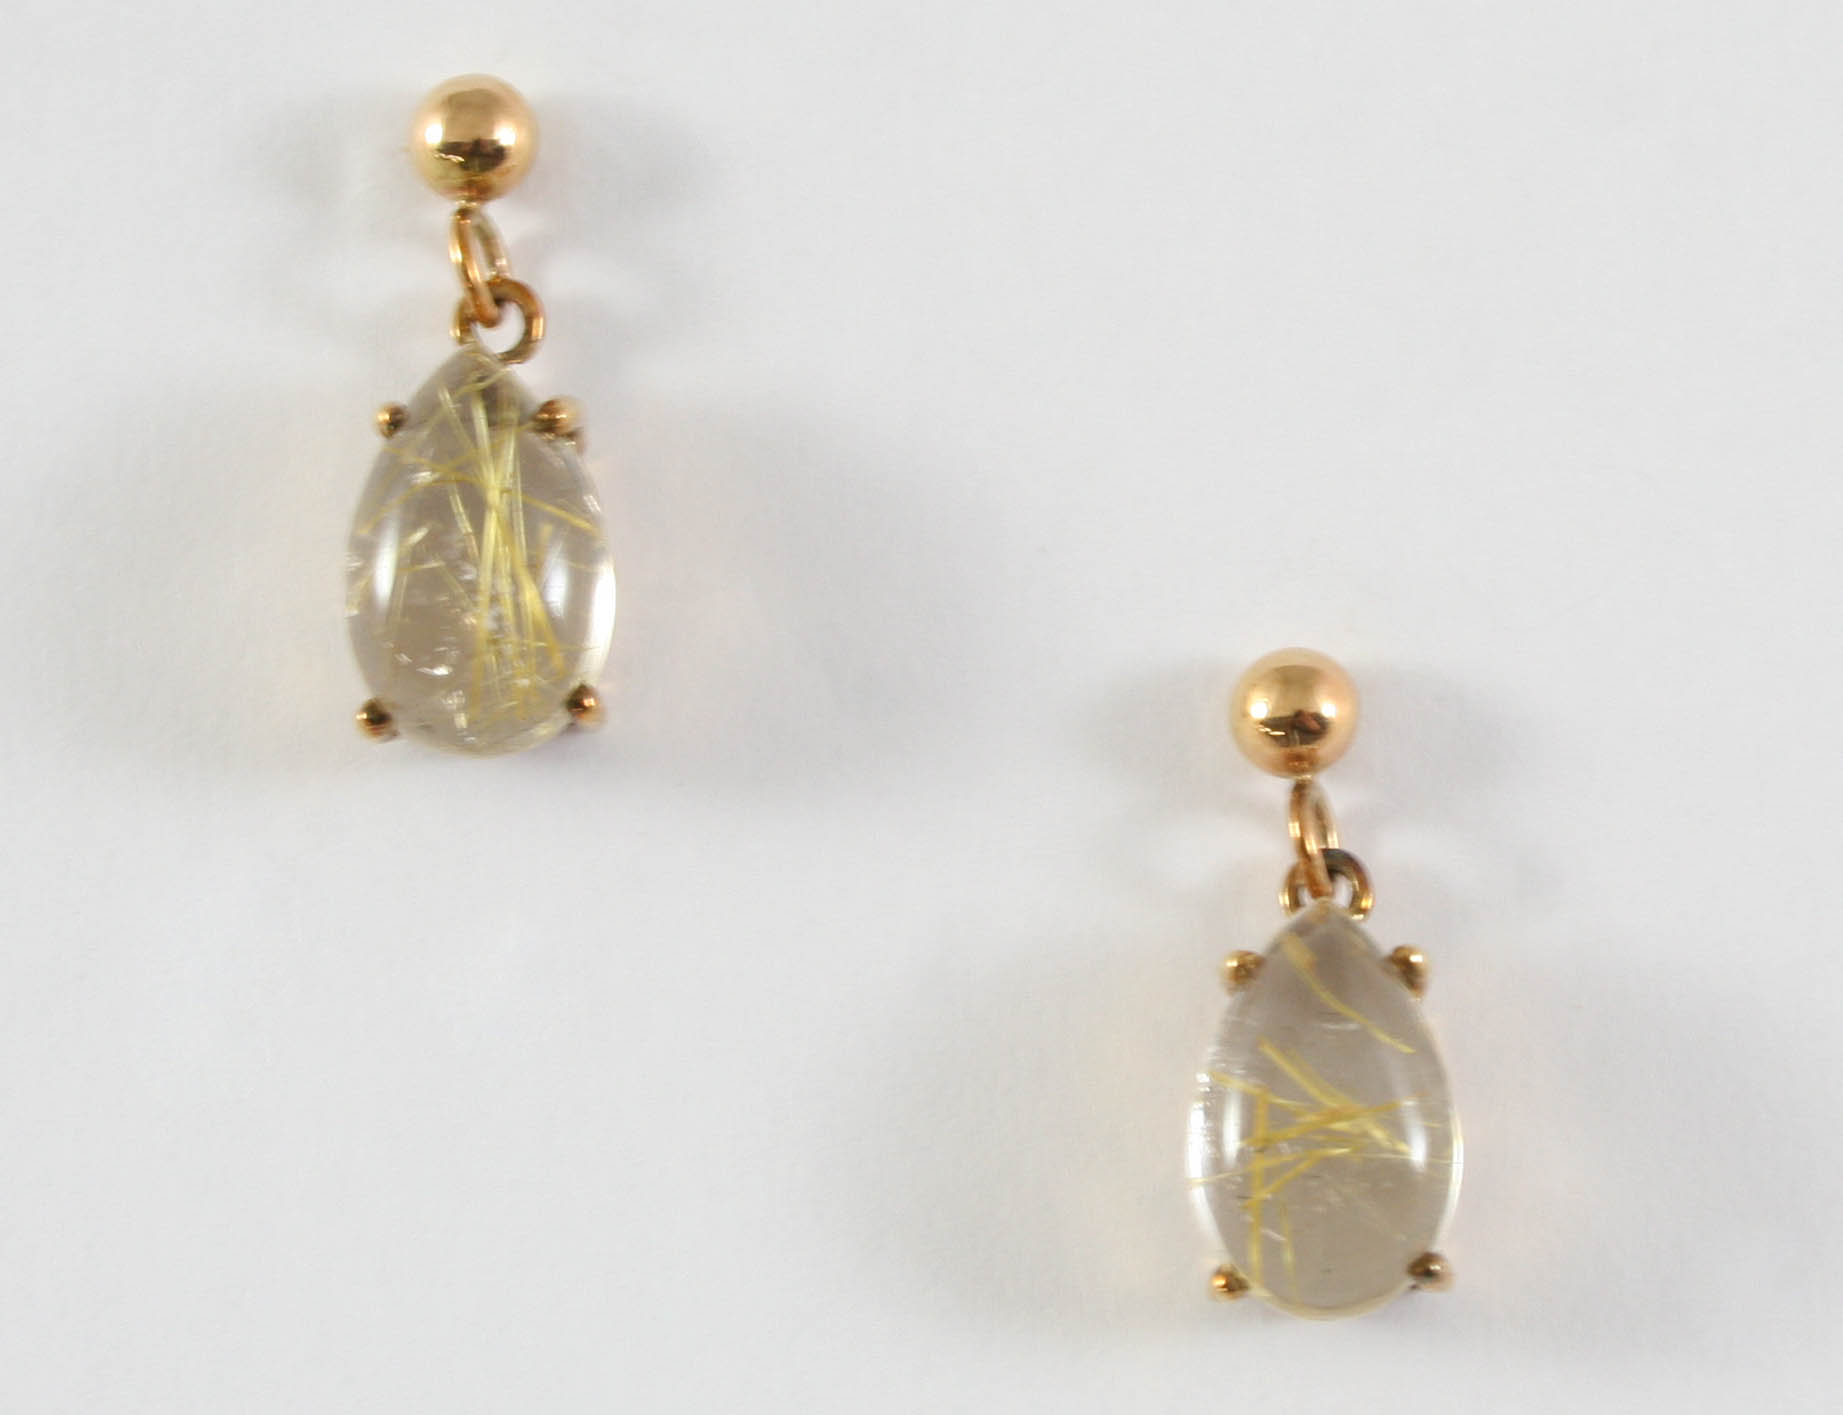 A PAIR OF RUTILATED QUARTZ DROP EARRINGS each earring set with a pear-shaped quartz drop, in